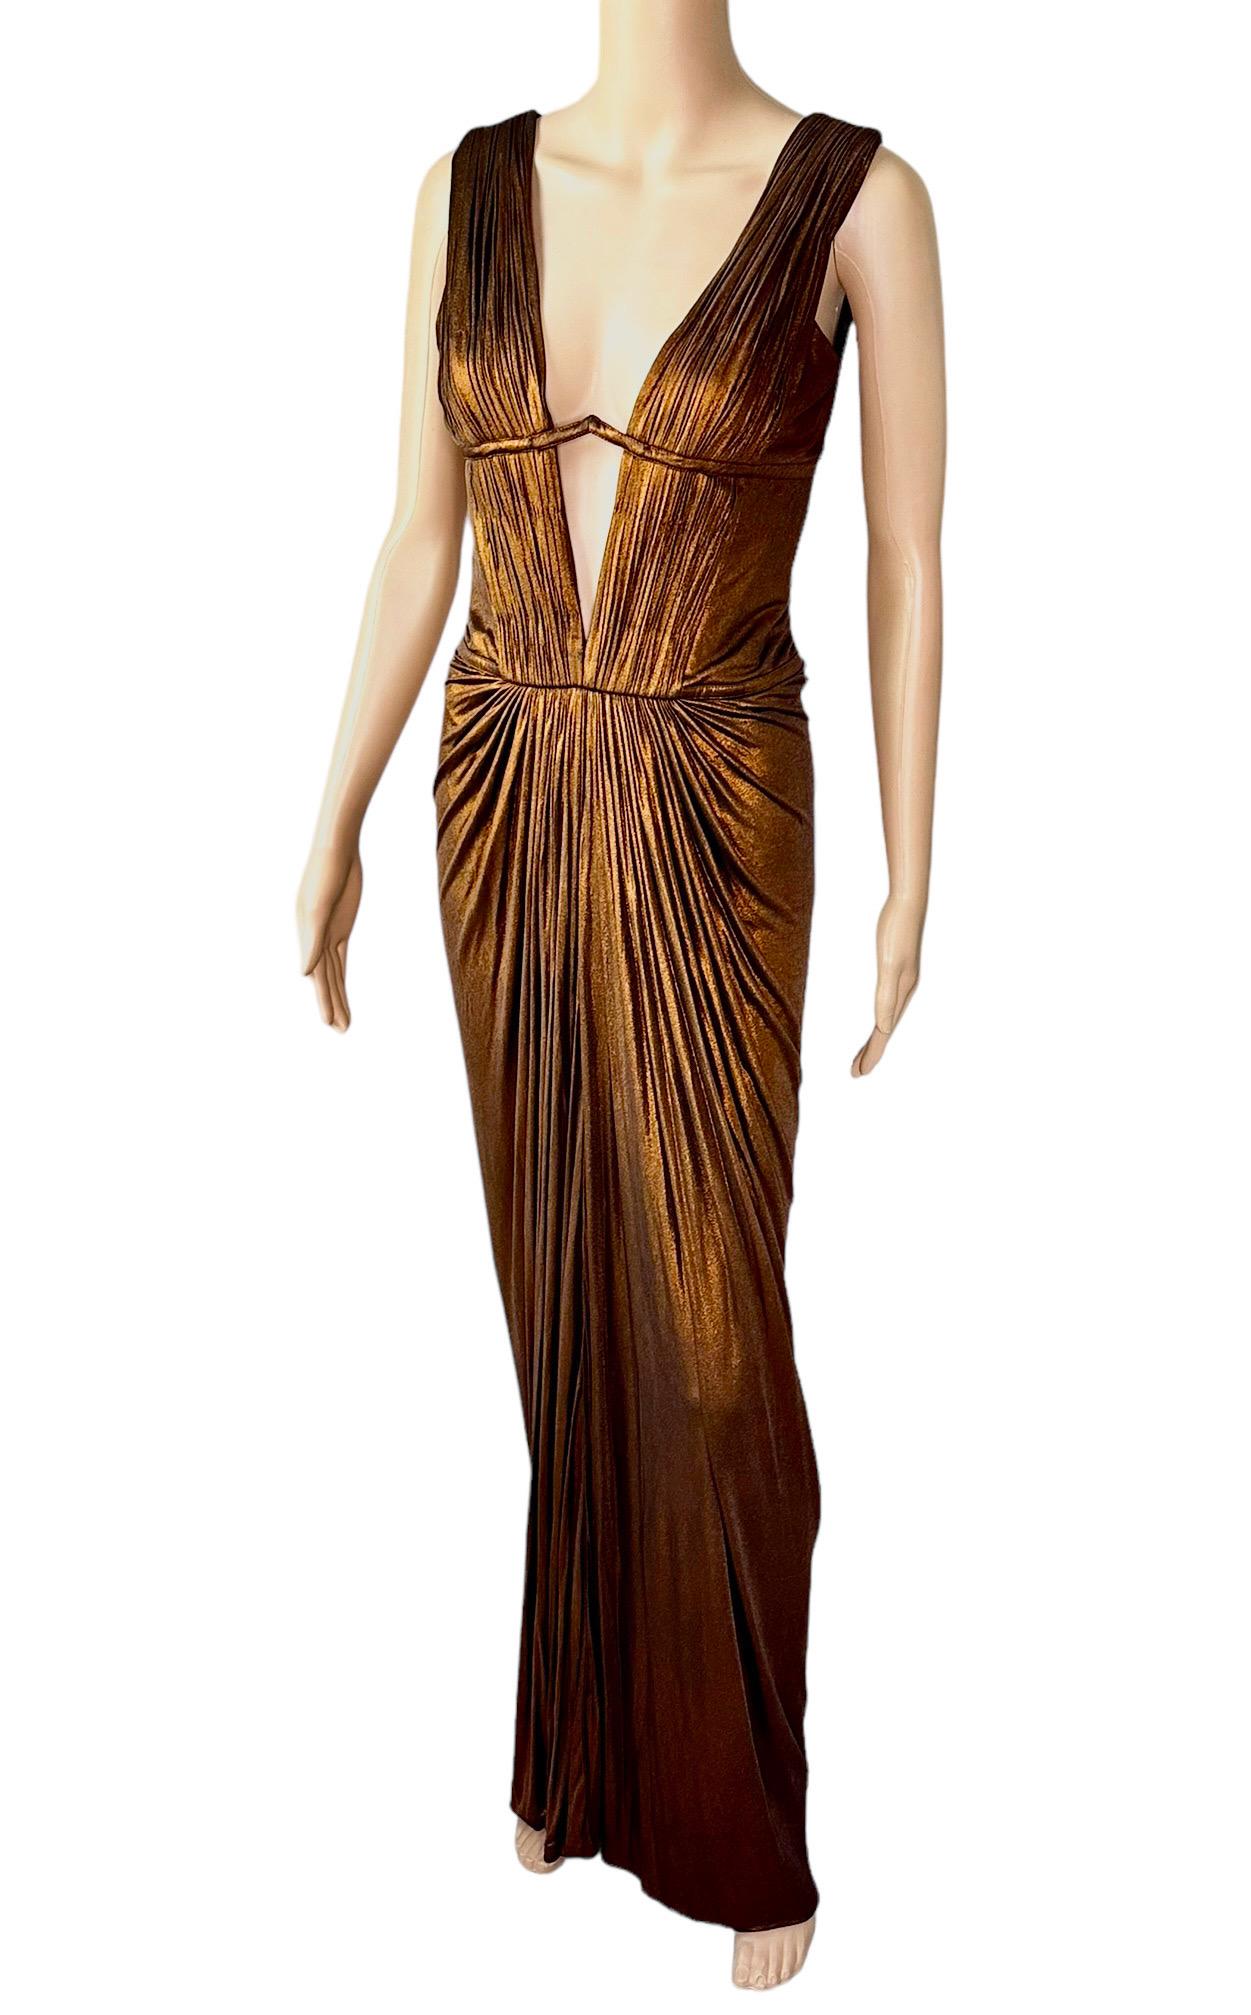 Roberto Cavalli F/W 2007 Metallic Plunging Neckline Open Back Evening Dress Gown For Sale 1